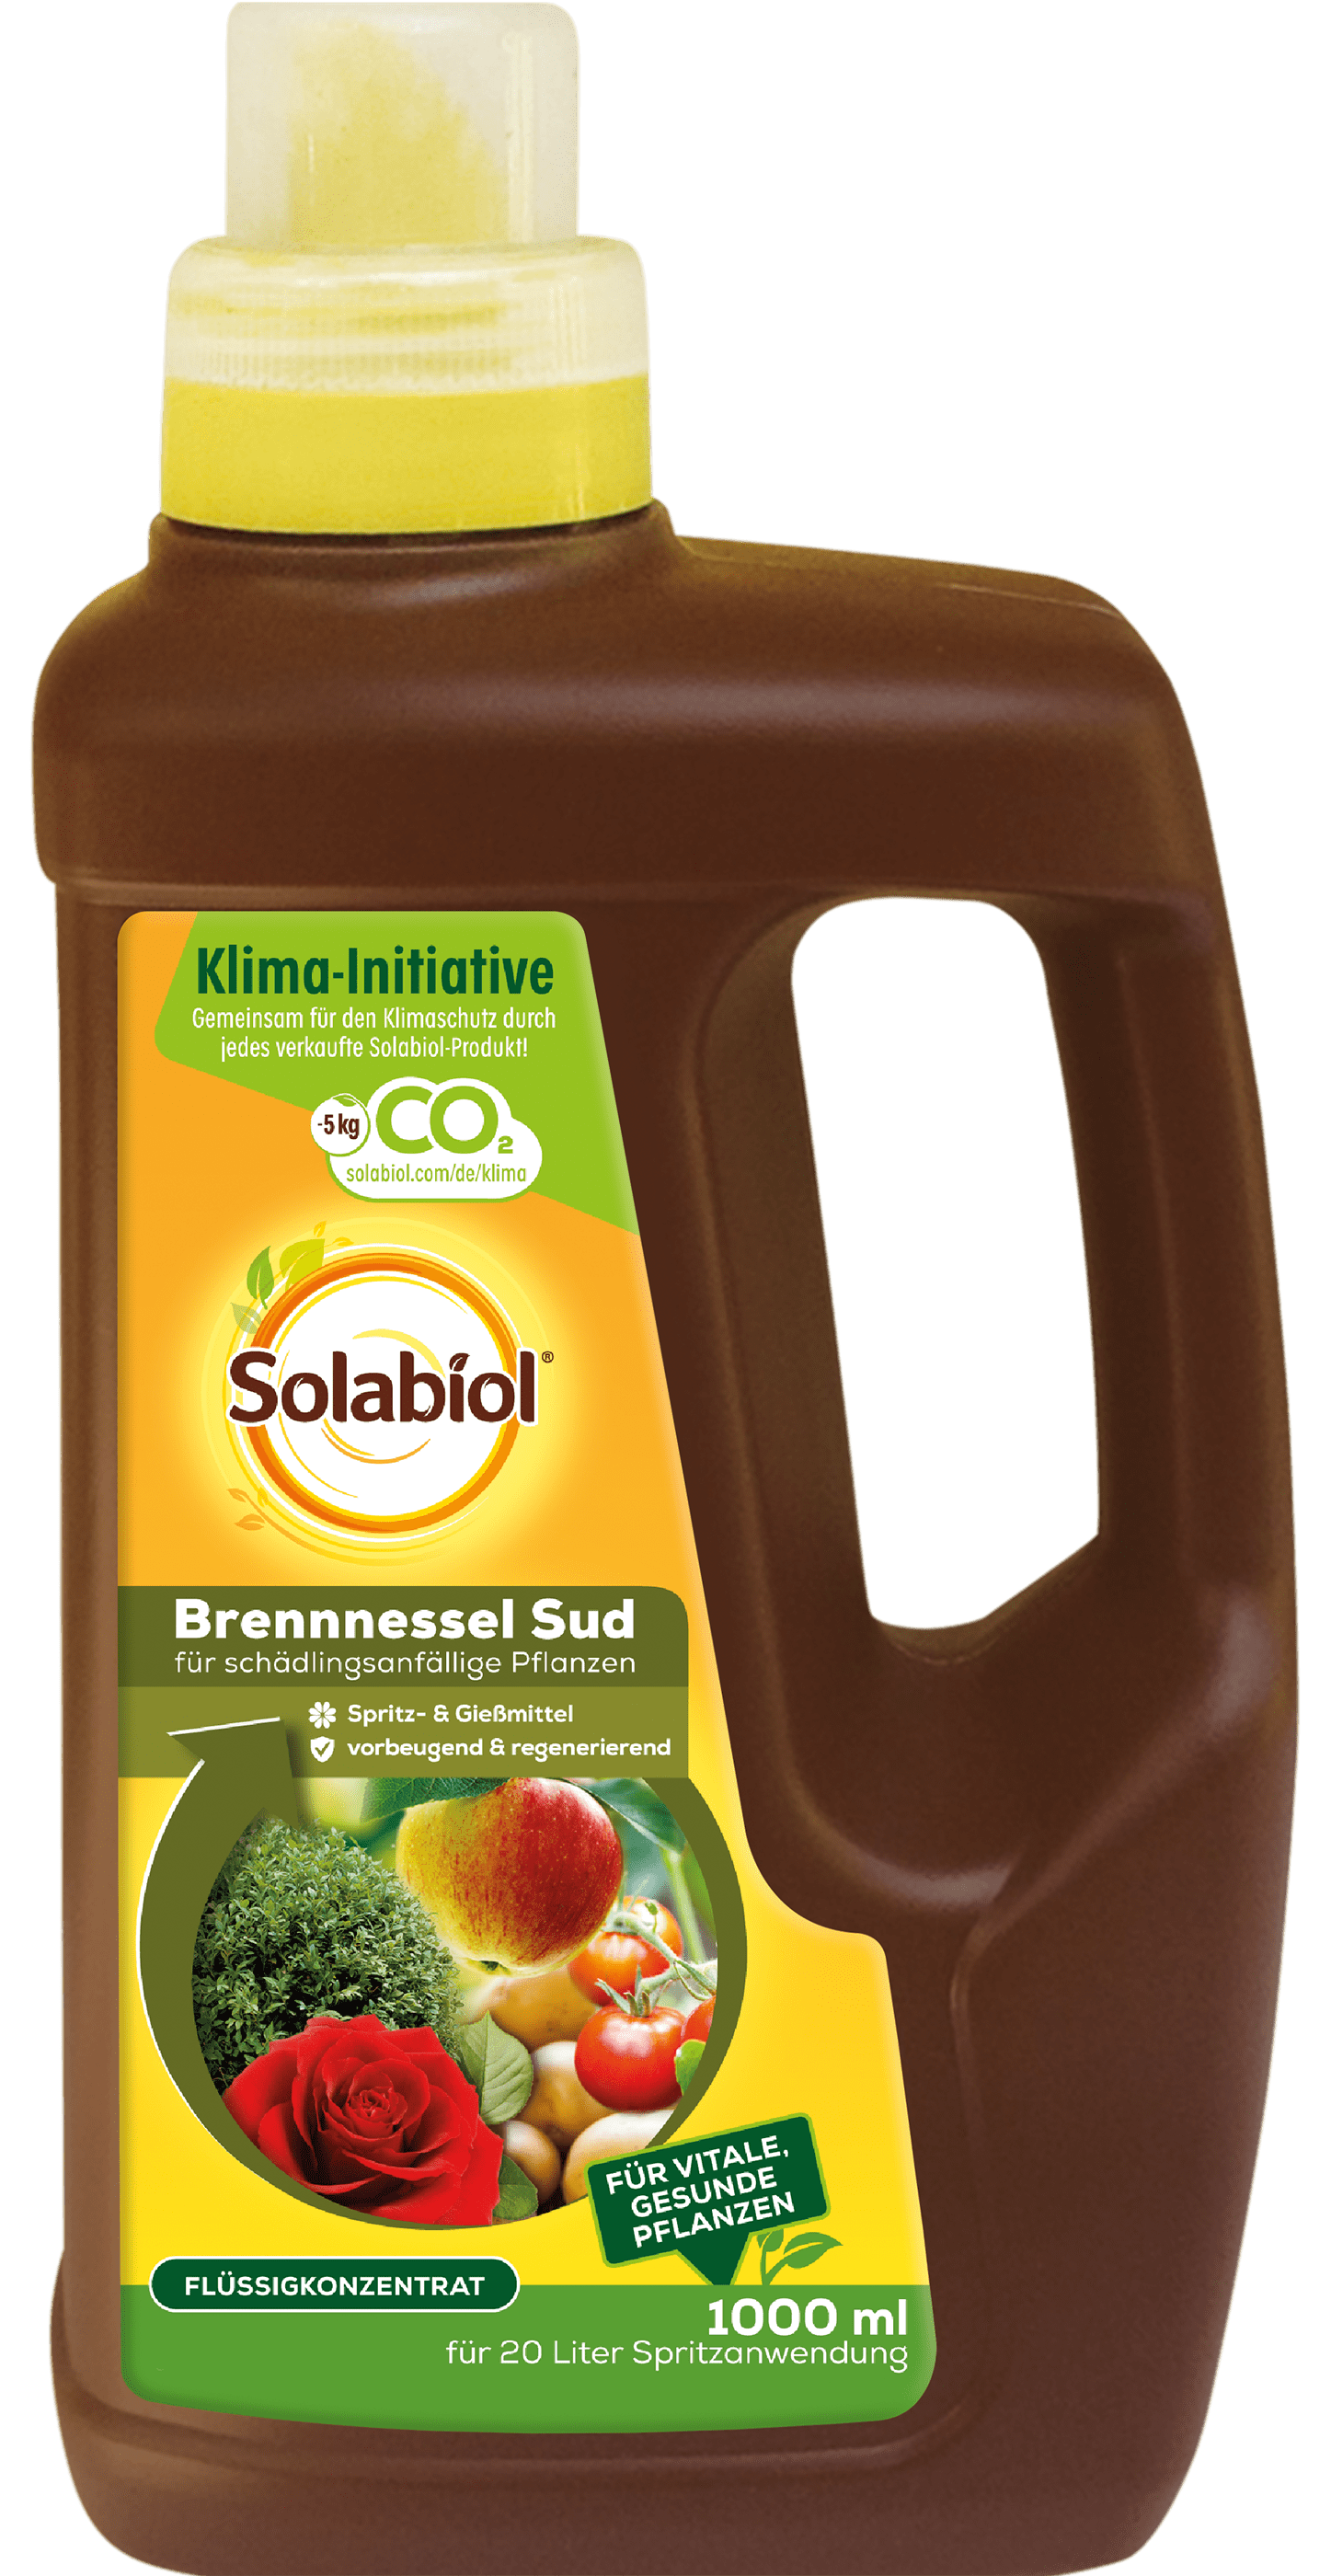 Solabiol Brennnessel Sud Biostimulierende Eigenschaften 1 l